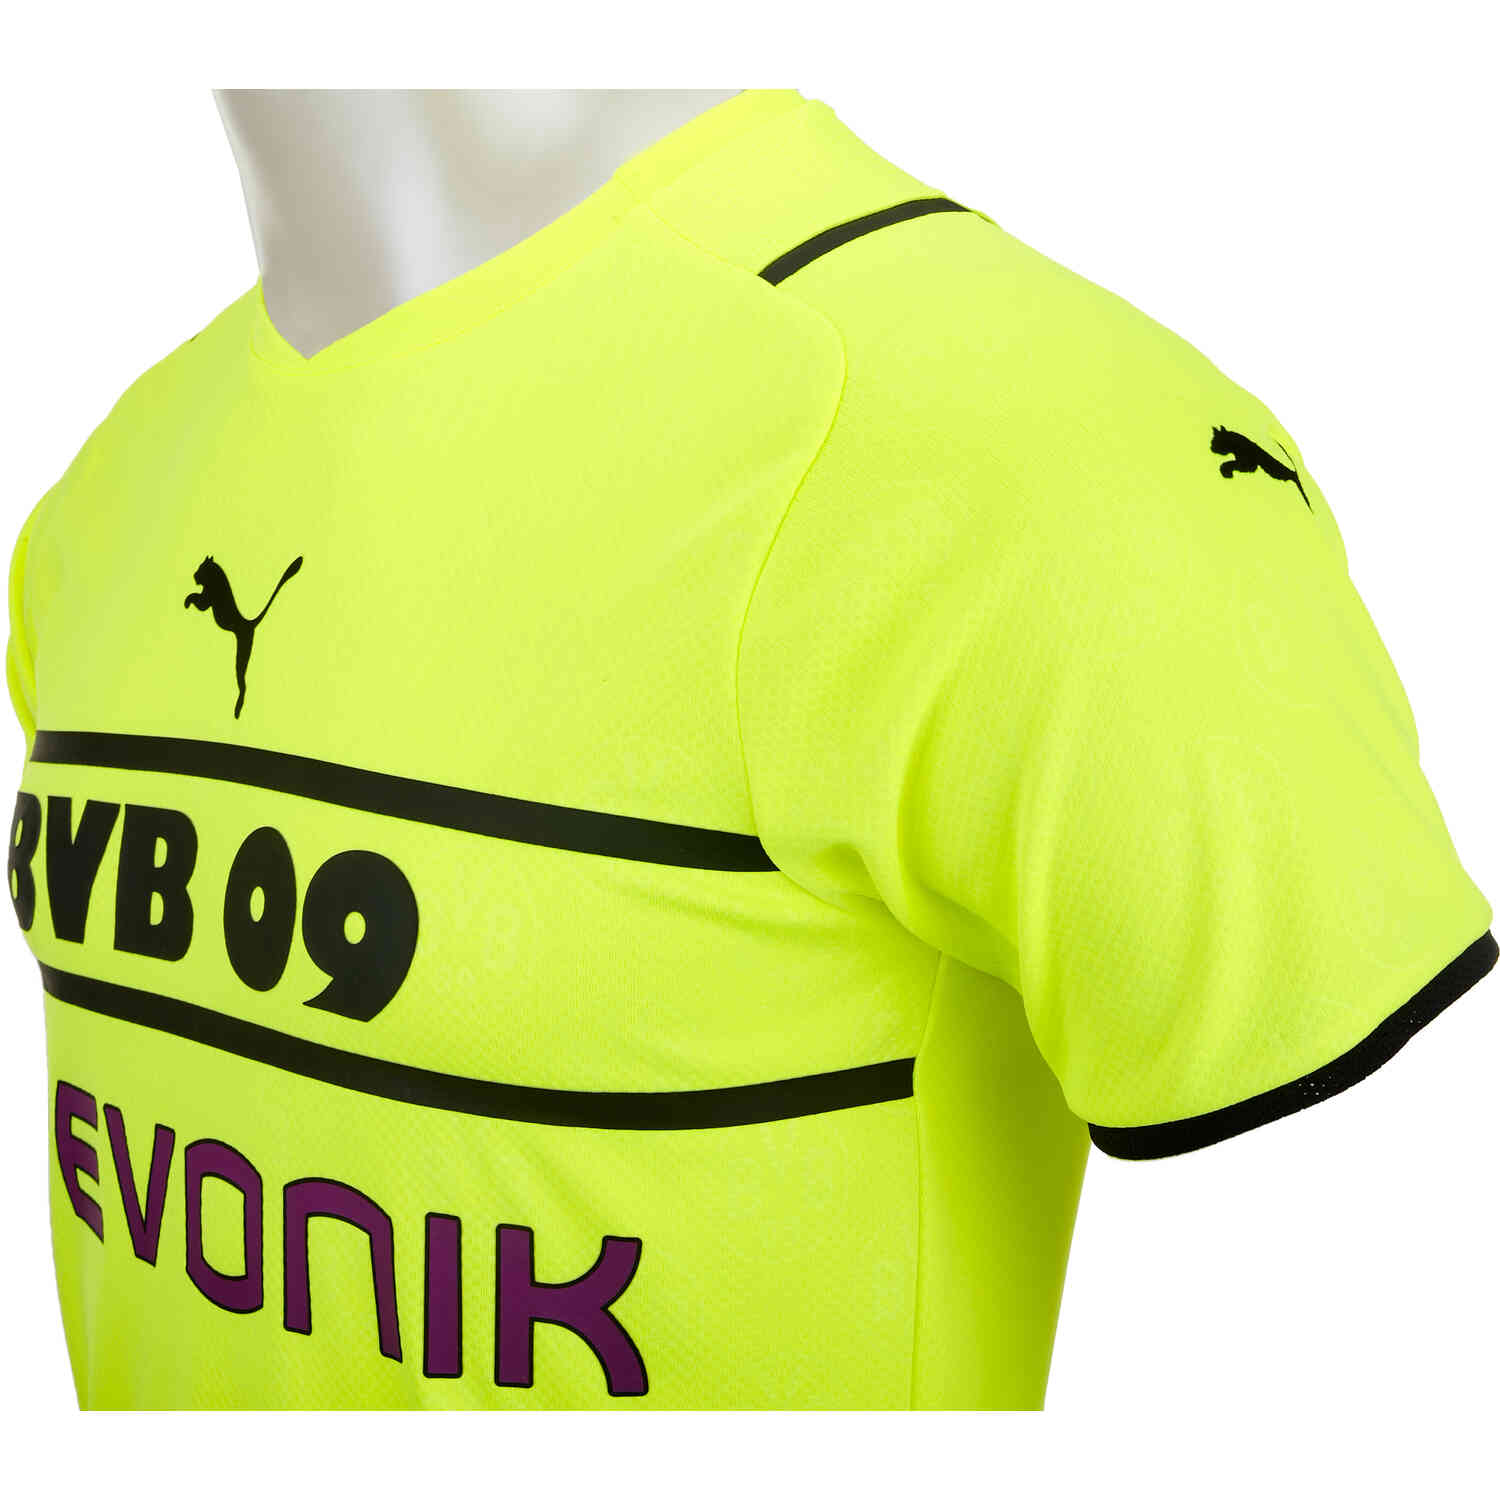 Dortmund Haaland fan shirt trikot & shorts kinder boys Gr 152 158 S 